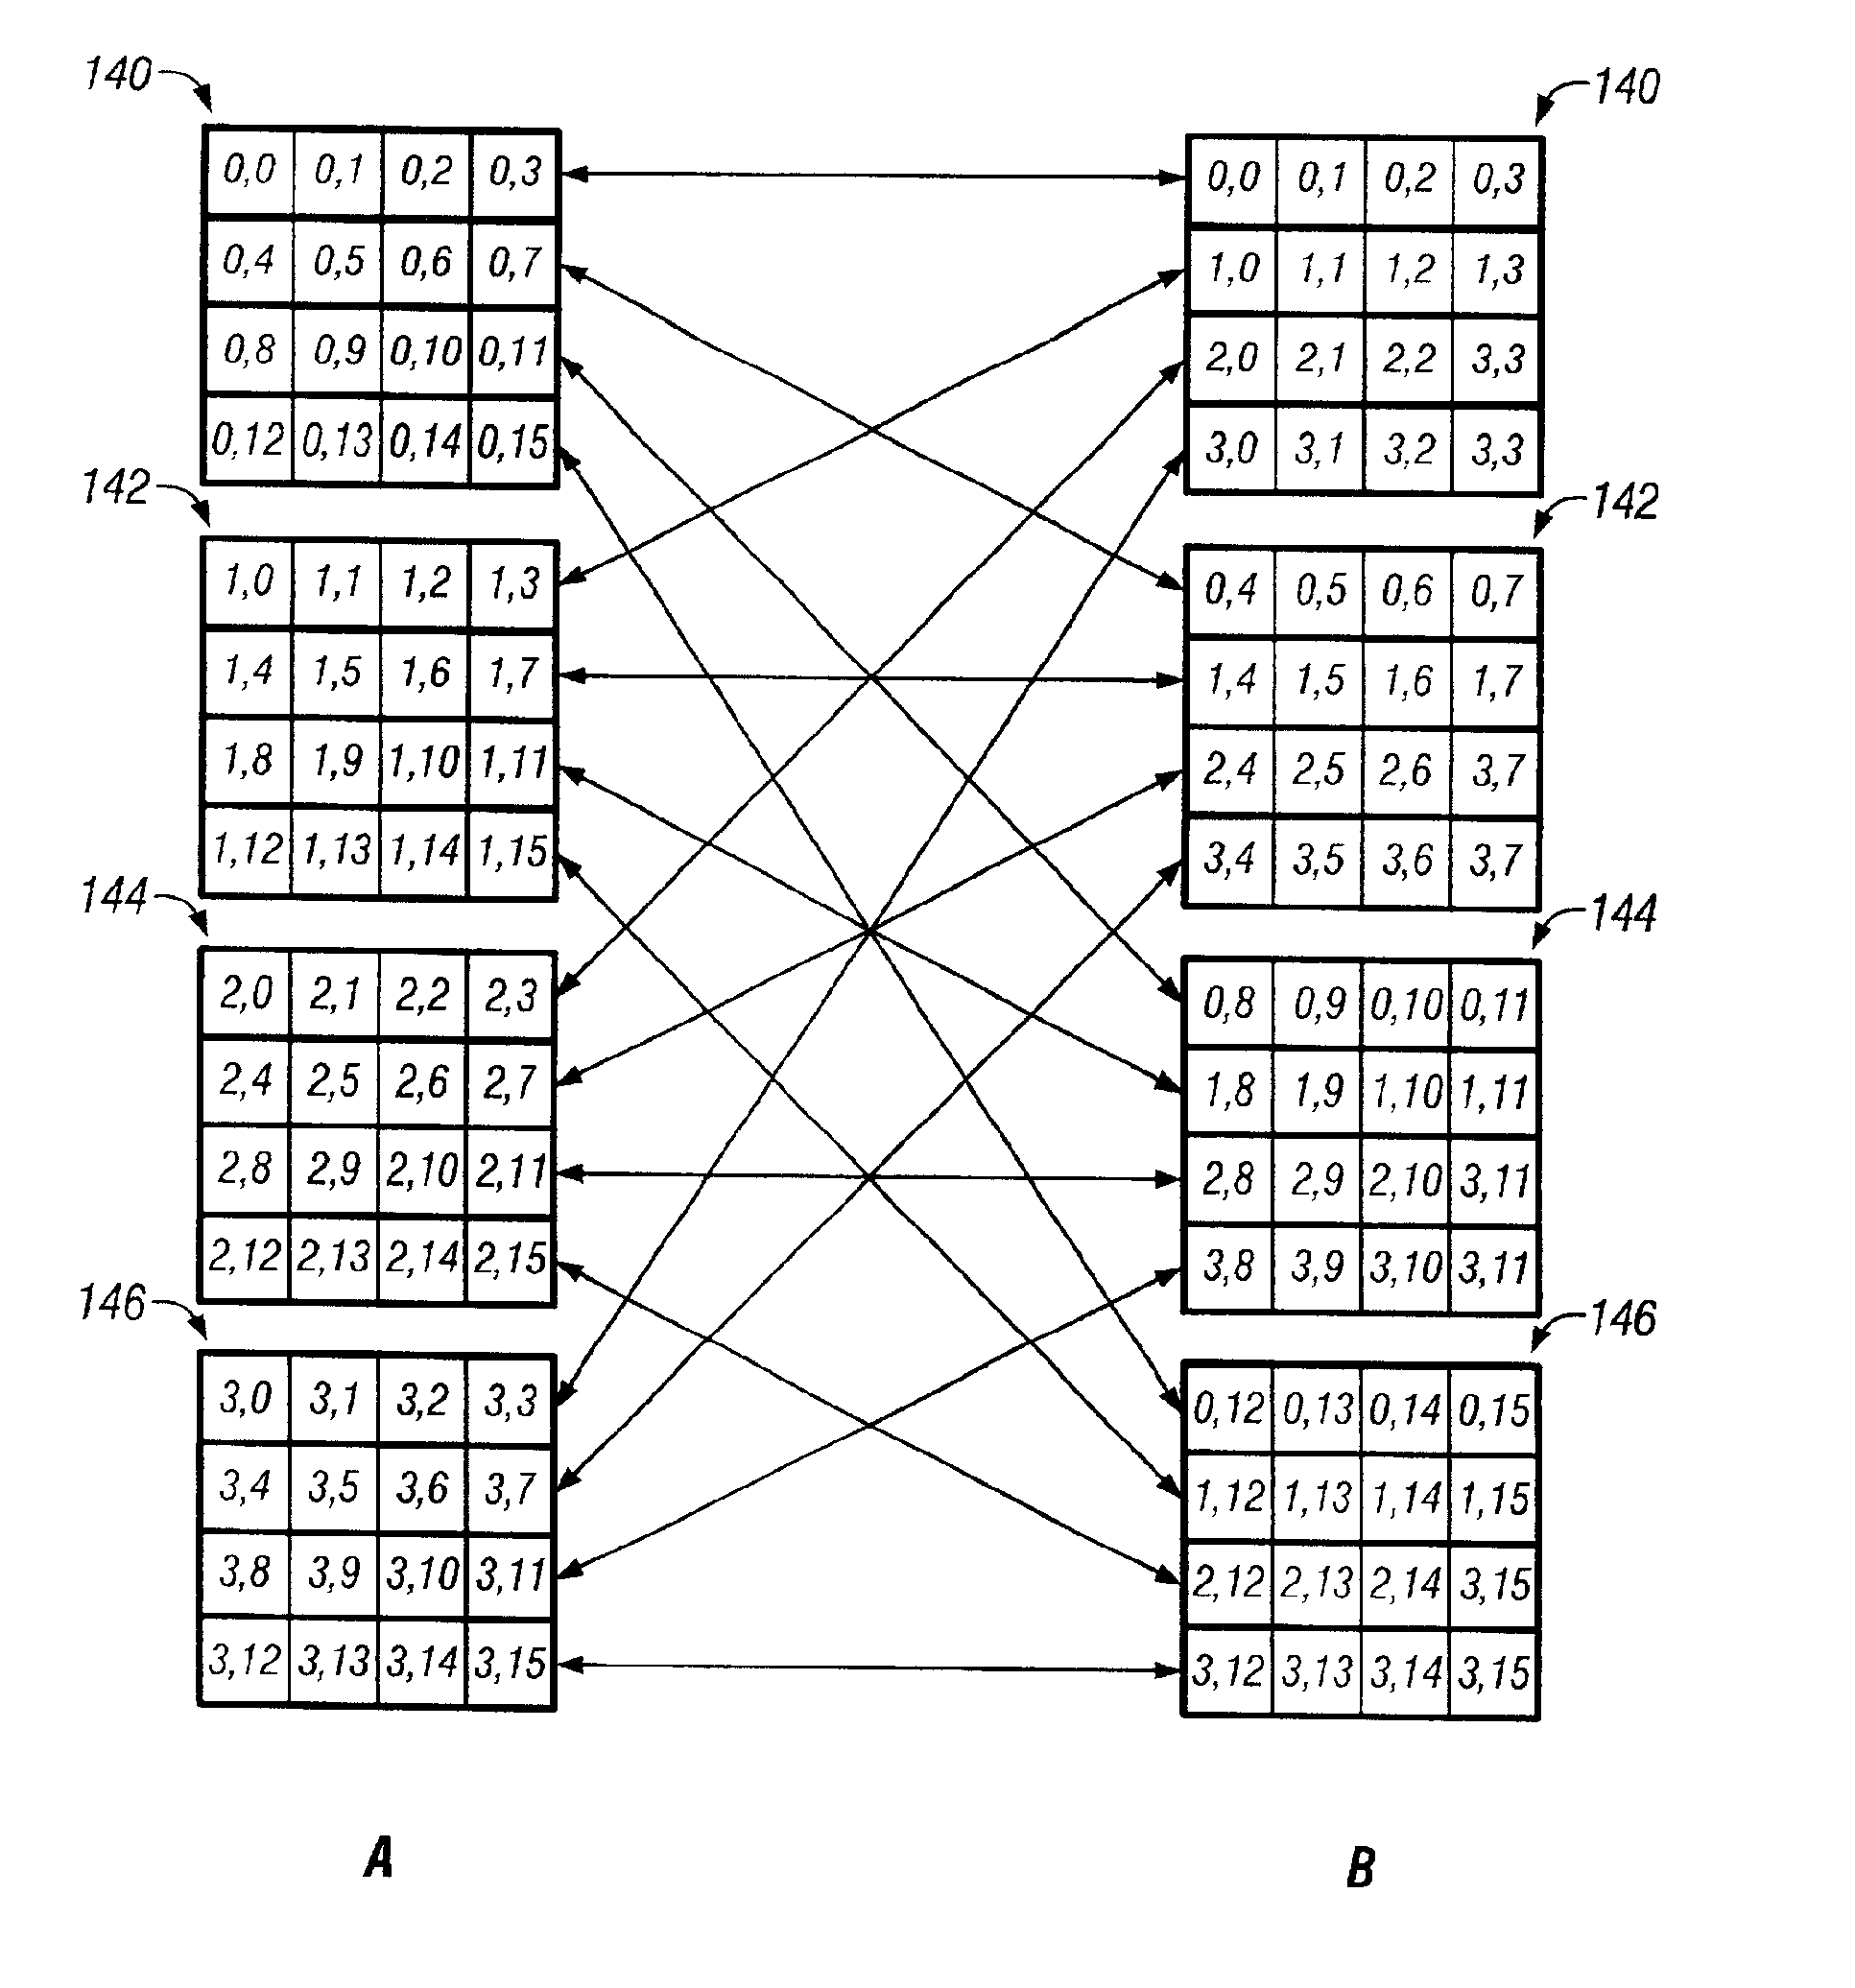 Rearranging data between vector and matrix forms in a SIMD matrix processor